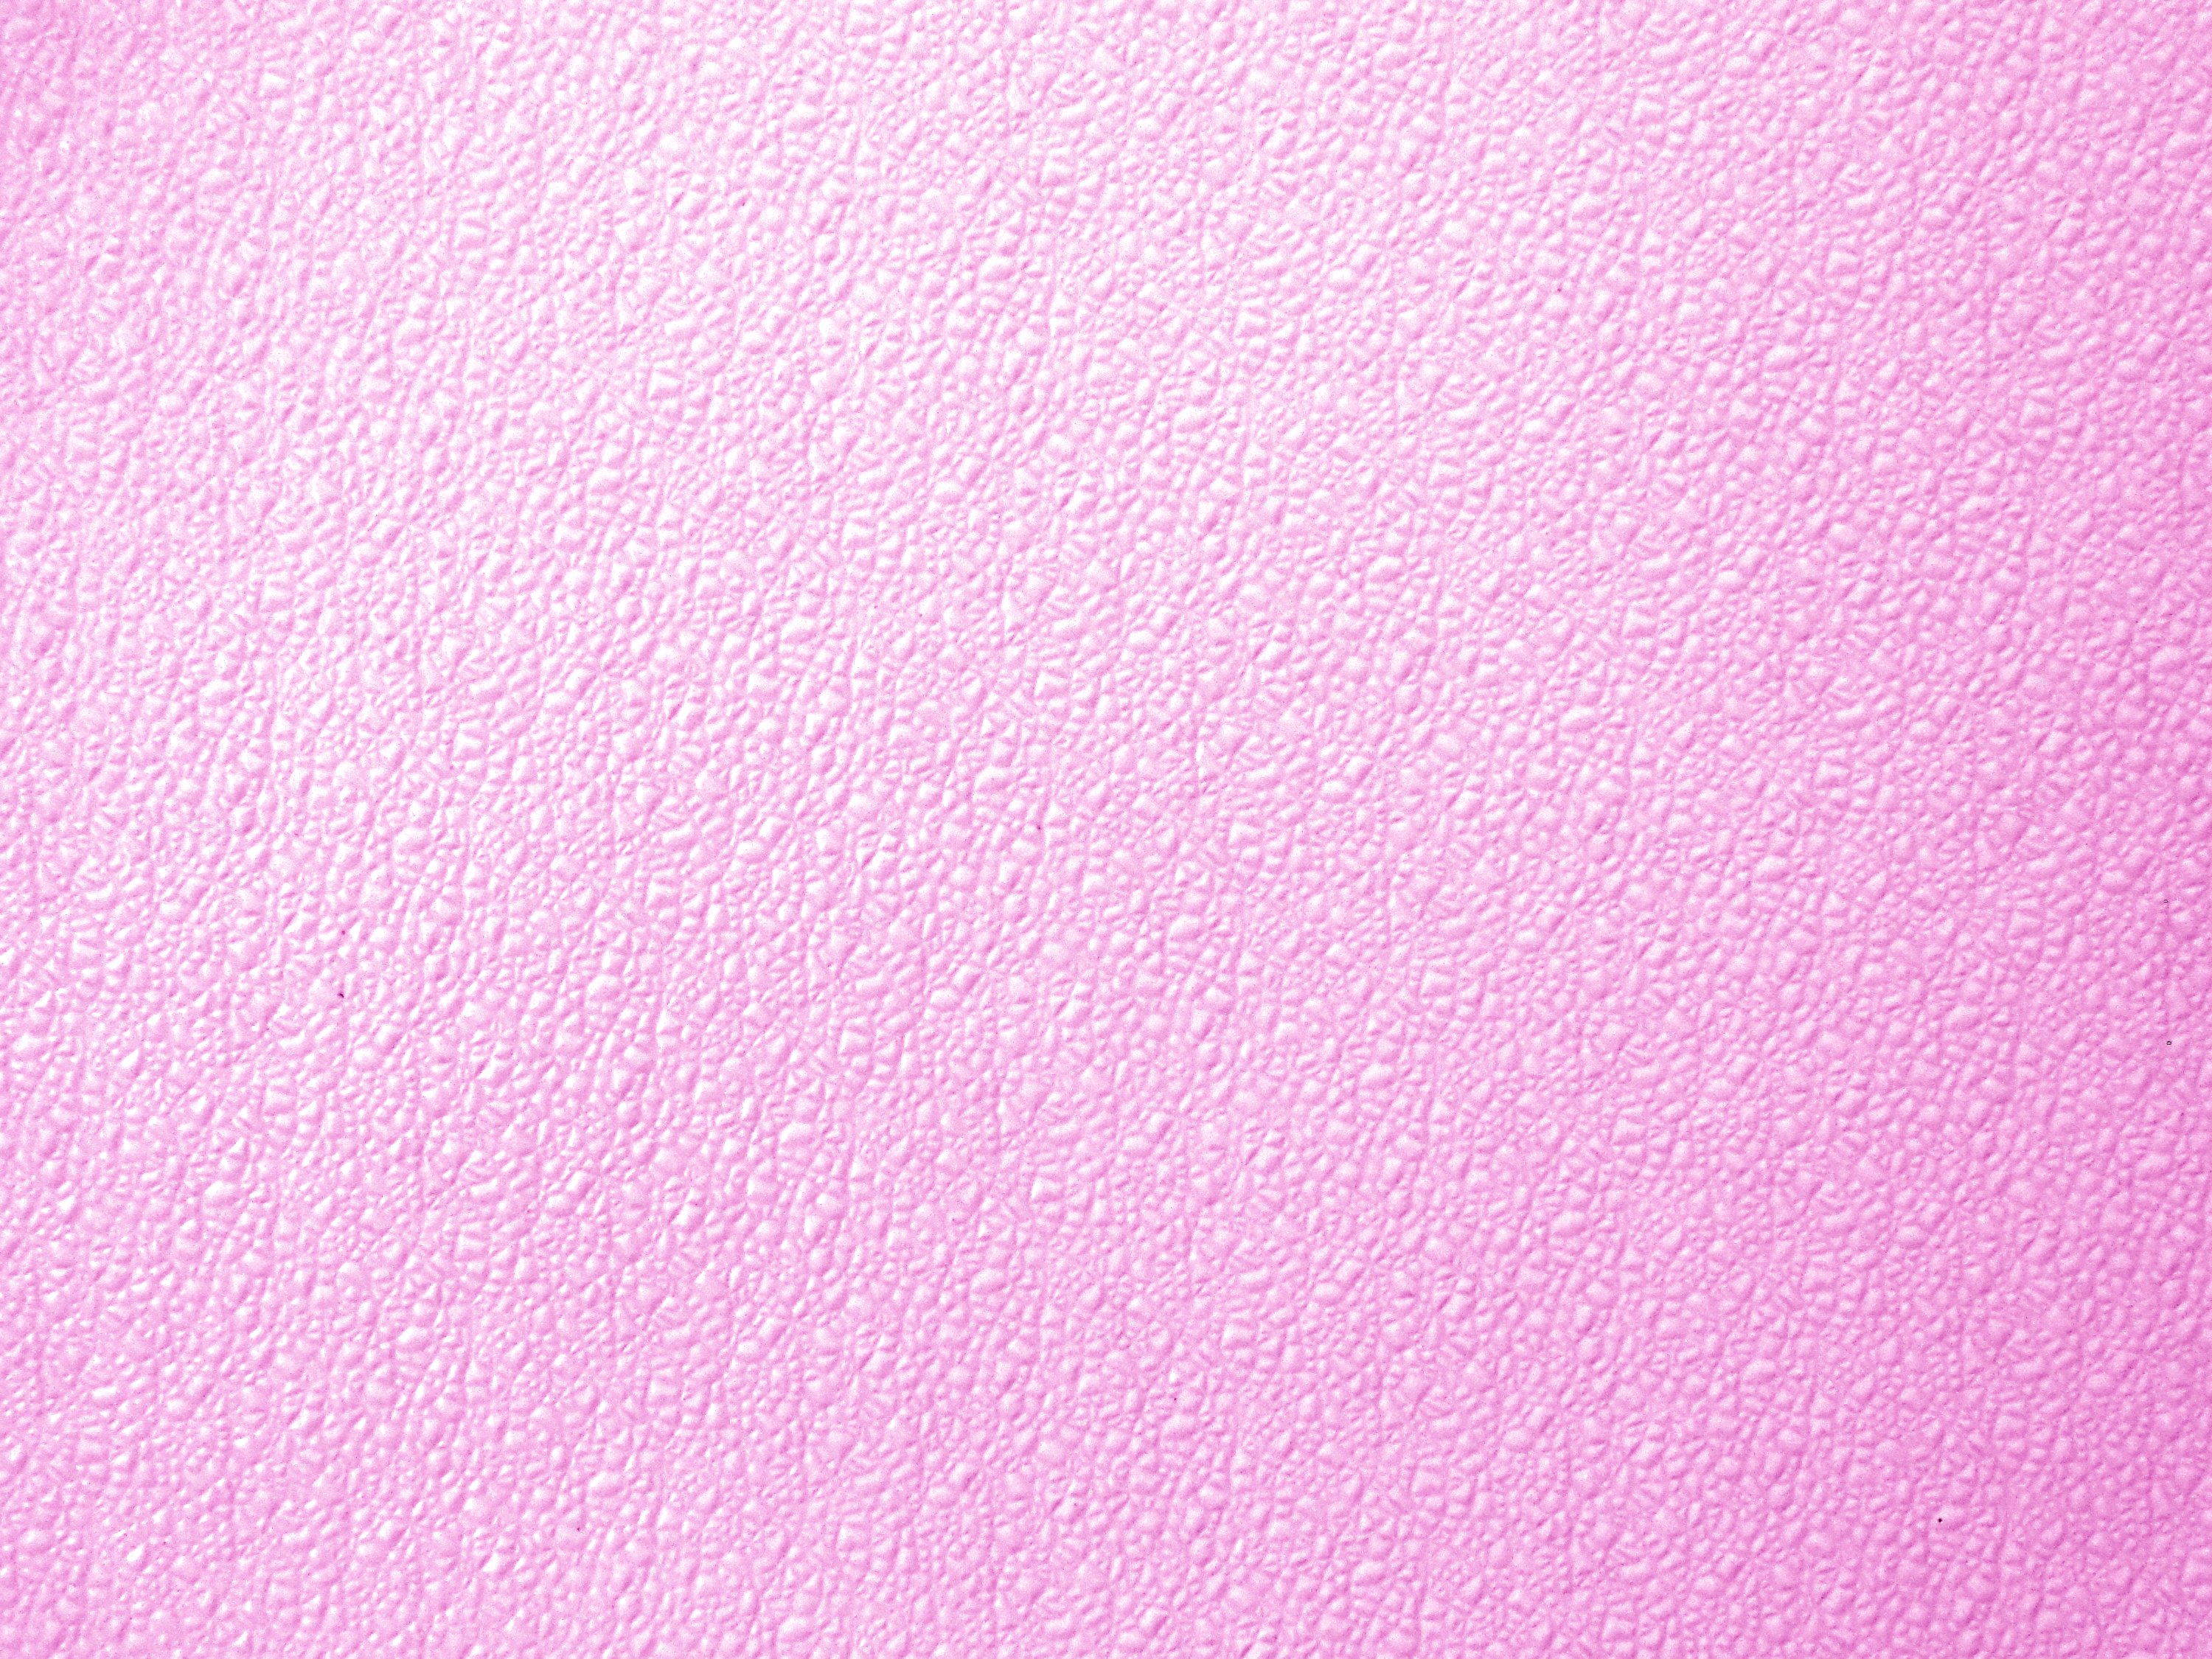 Bumpy Light Pink Plastic Texture Picture Free Photograph Photos